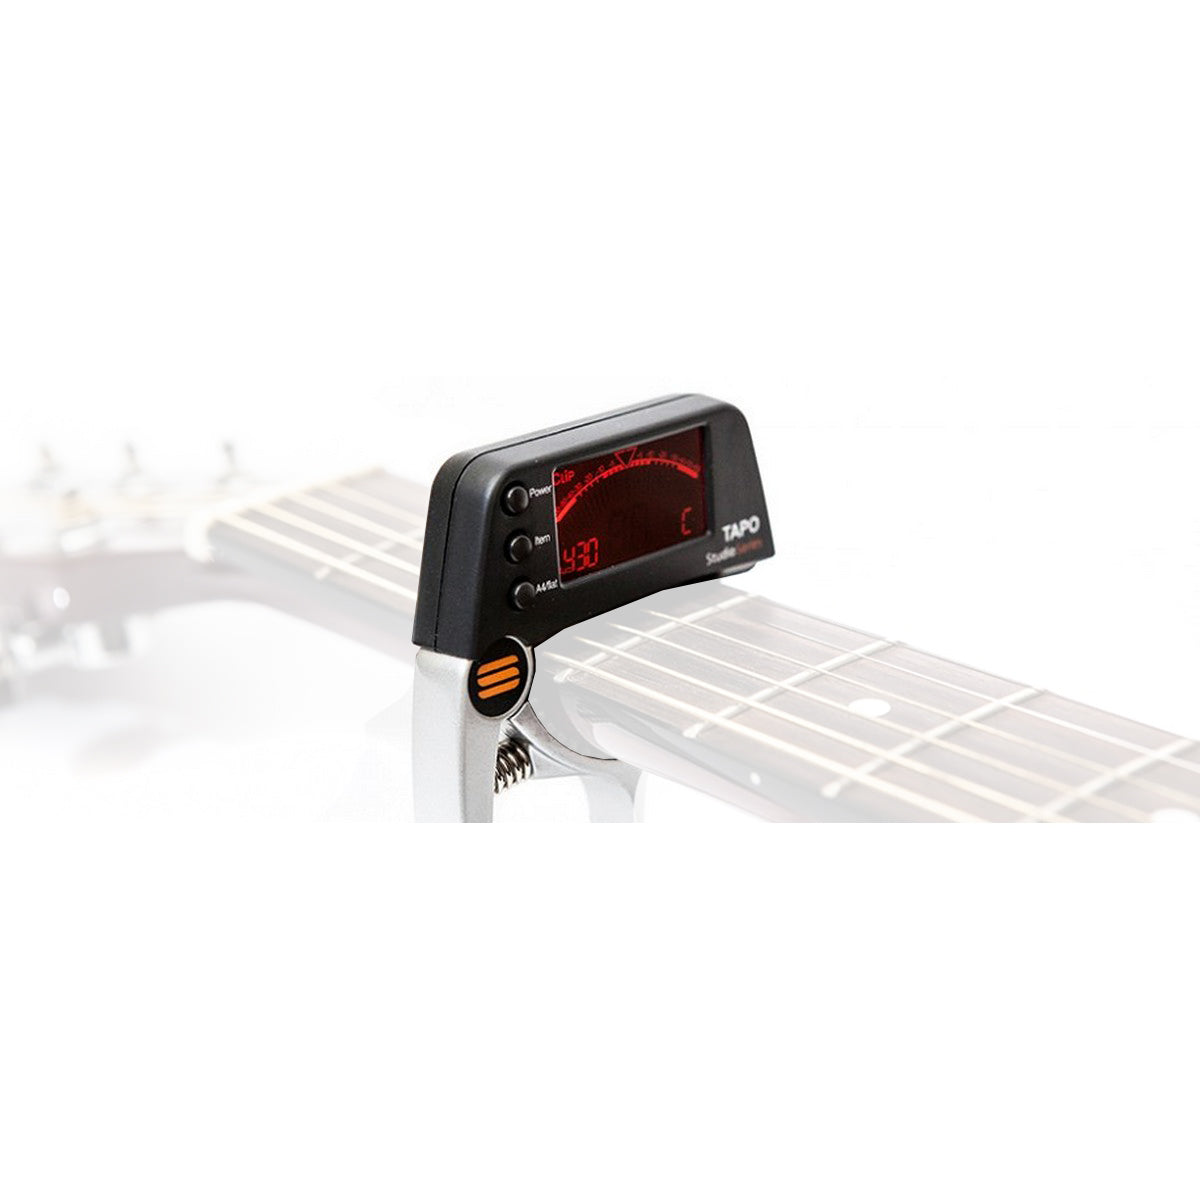 Editors Keys The TAPO Studio Series Tuner Built in Guitar Tuner (Used)